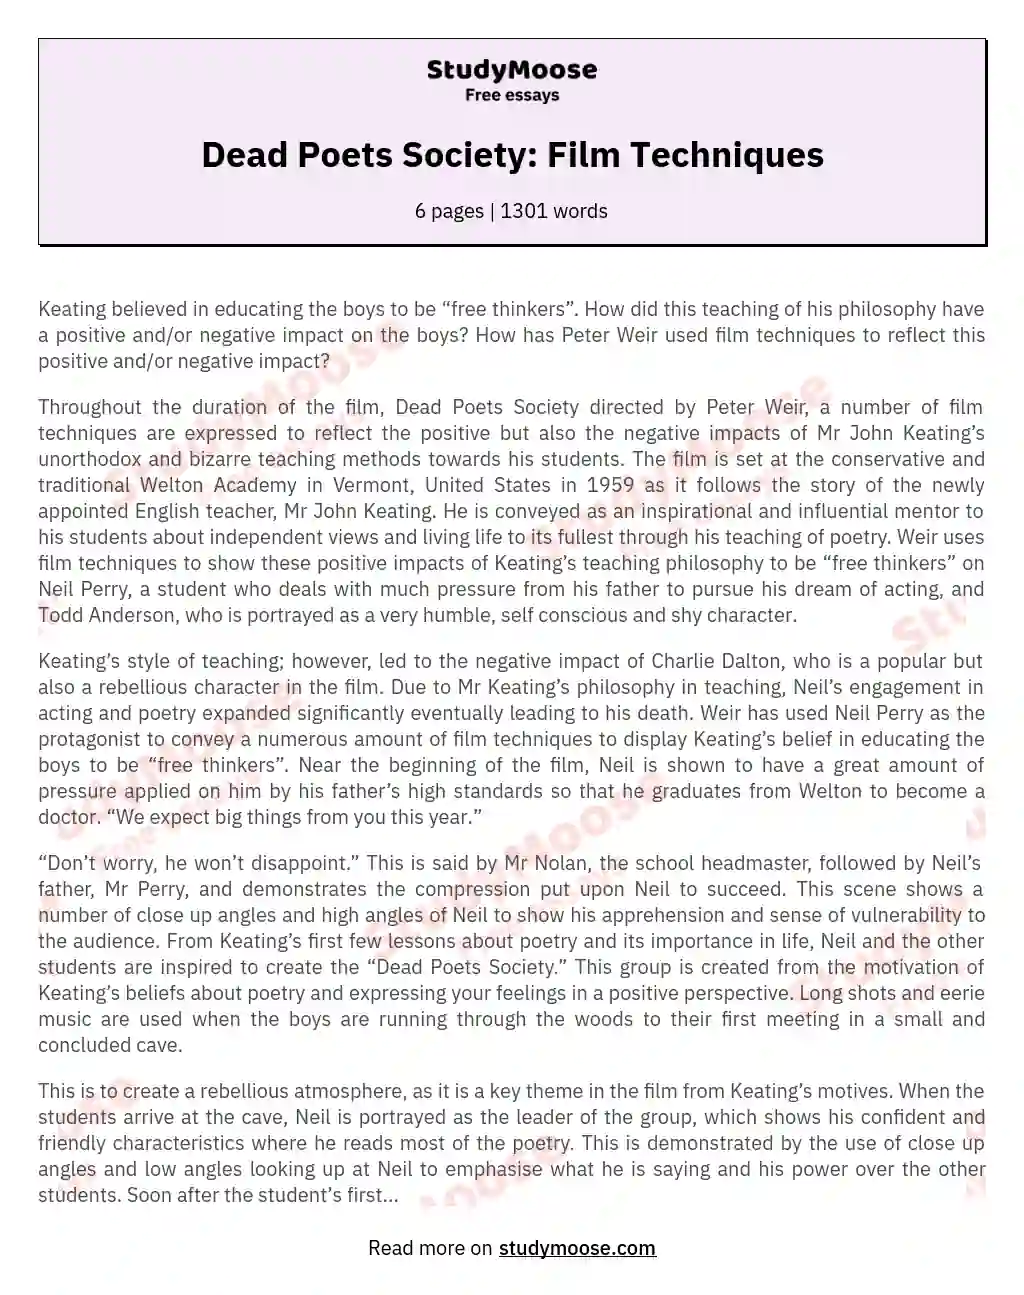 dead poets society film techniques essay